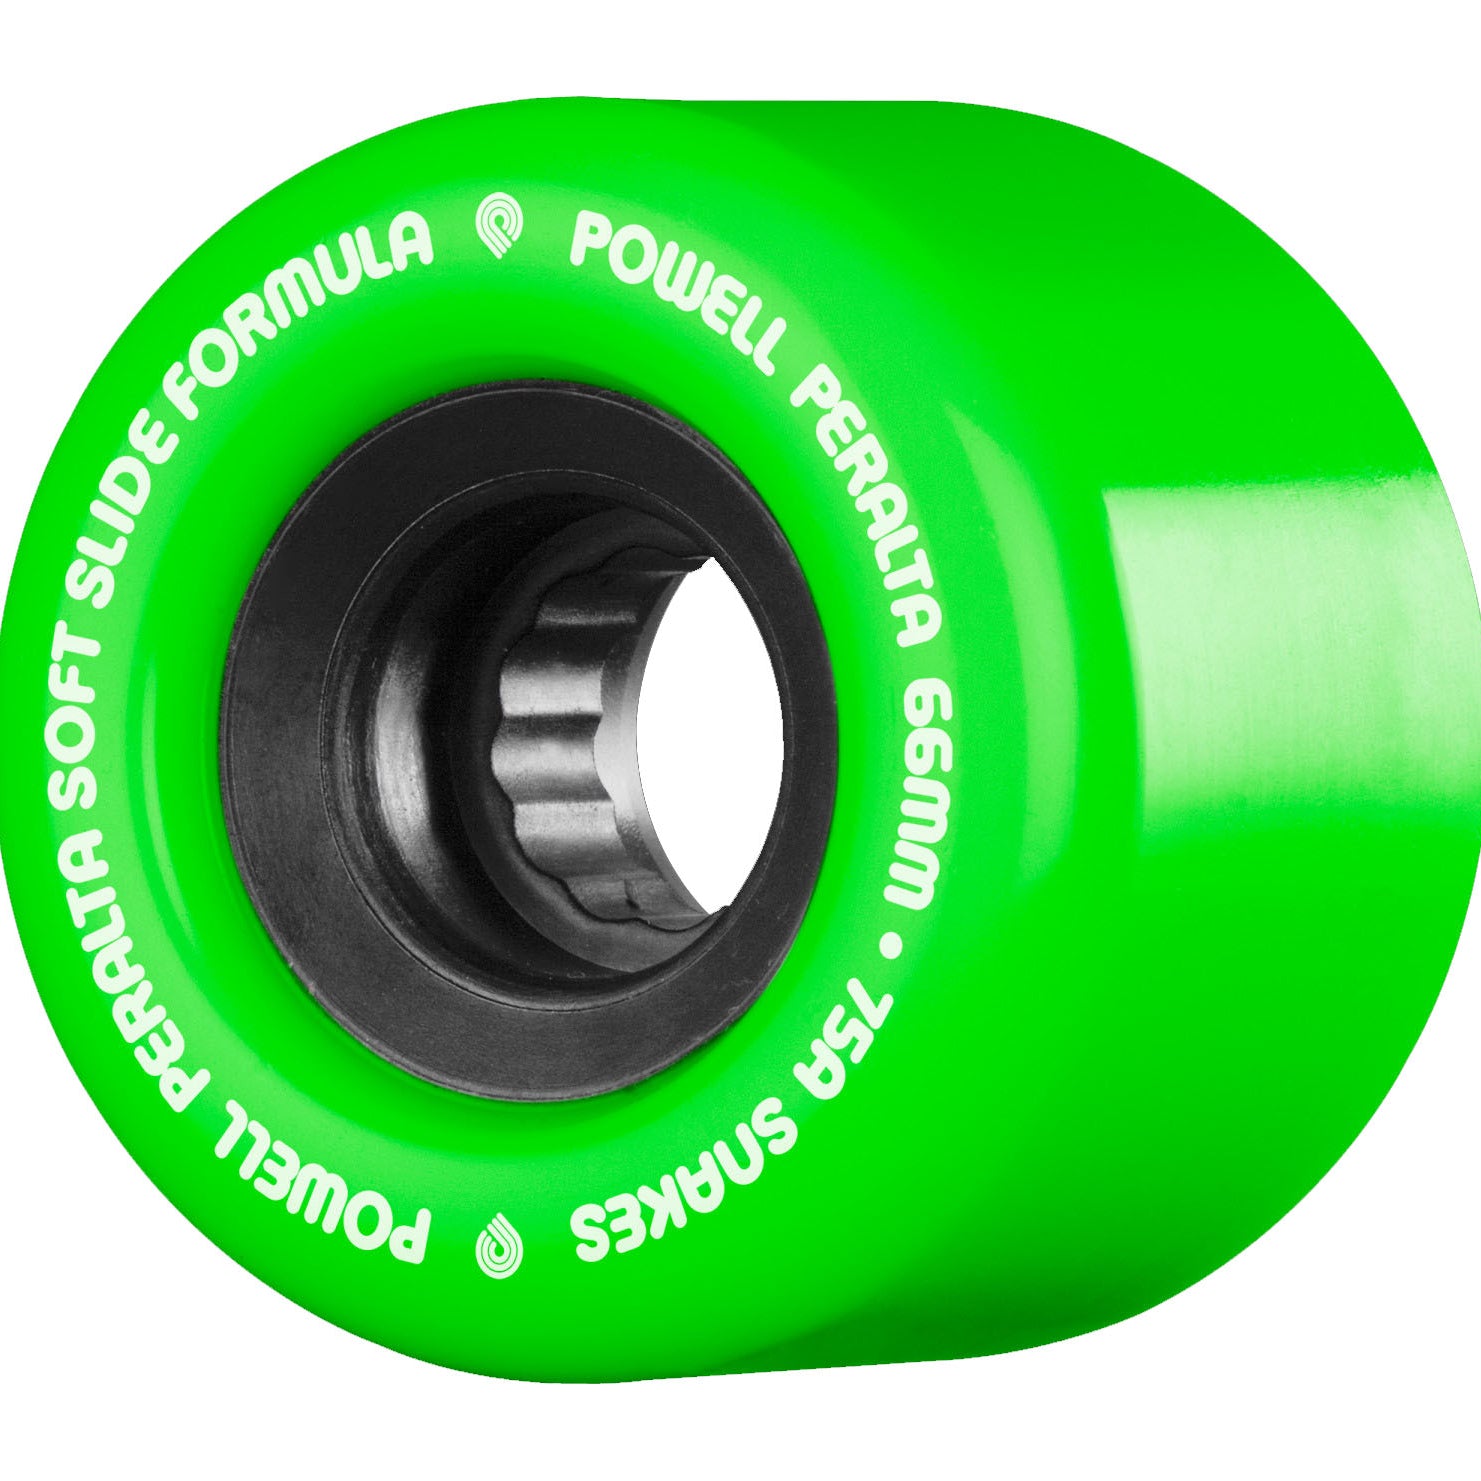 Powell Peralta Snakes Skateboard Wheels Green 66mm